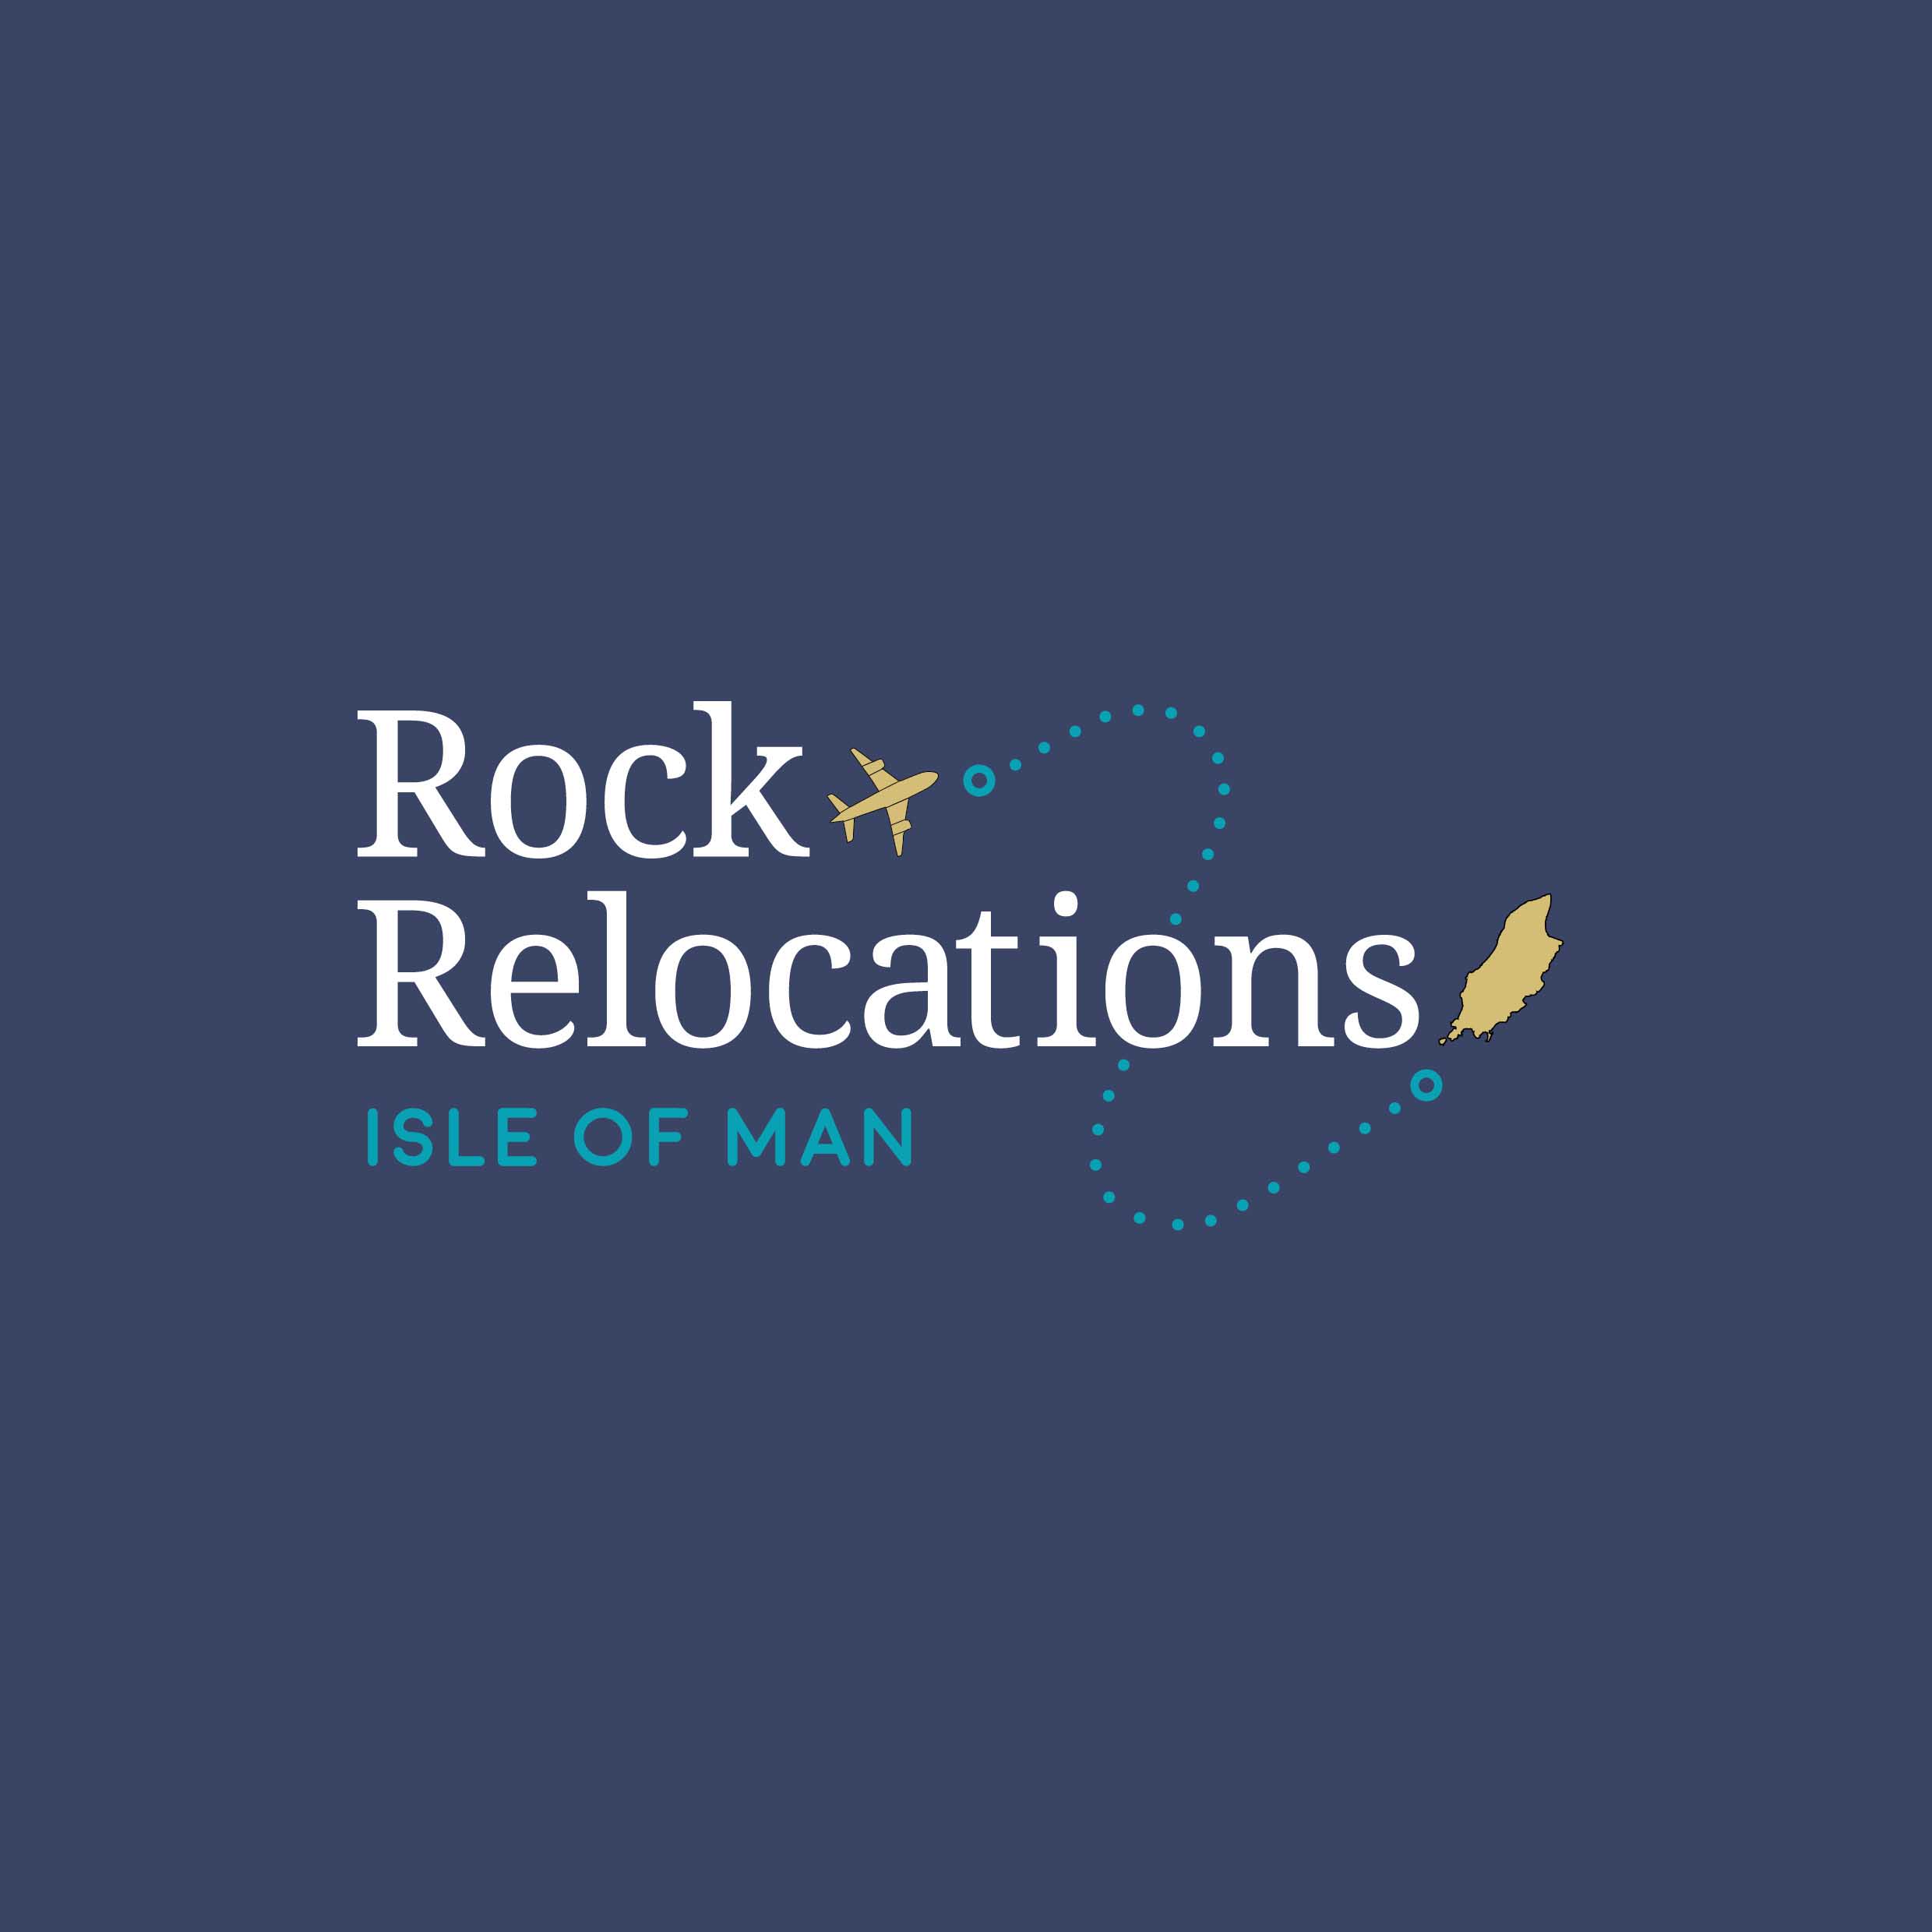 Rock Relocation Logos Squares2